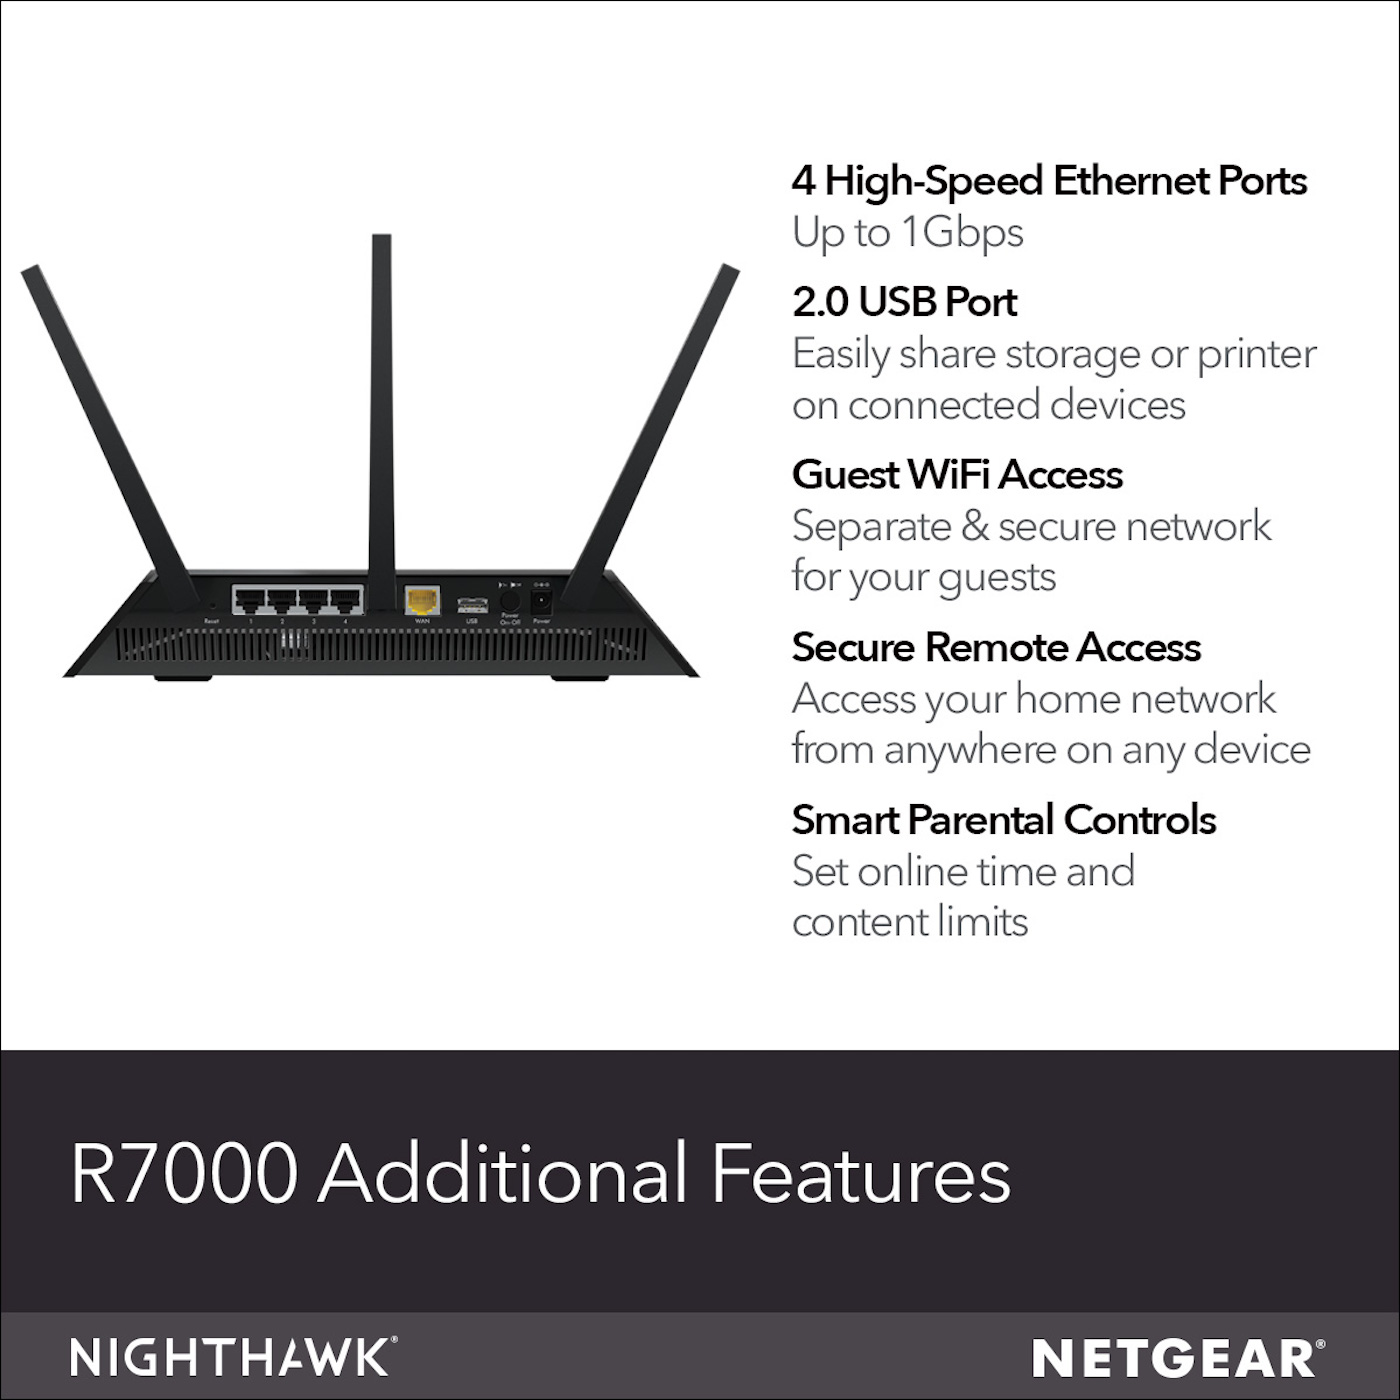 NETGEAR - Nighthawk R7000 AC1900 Smart WiFi Router - image 5 of 9